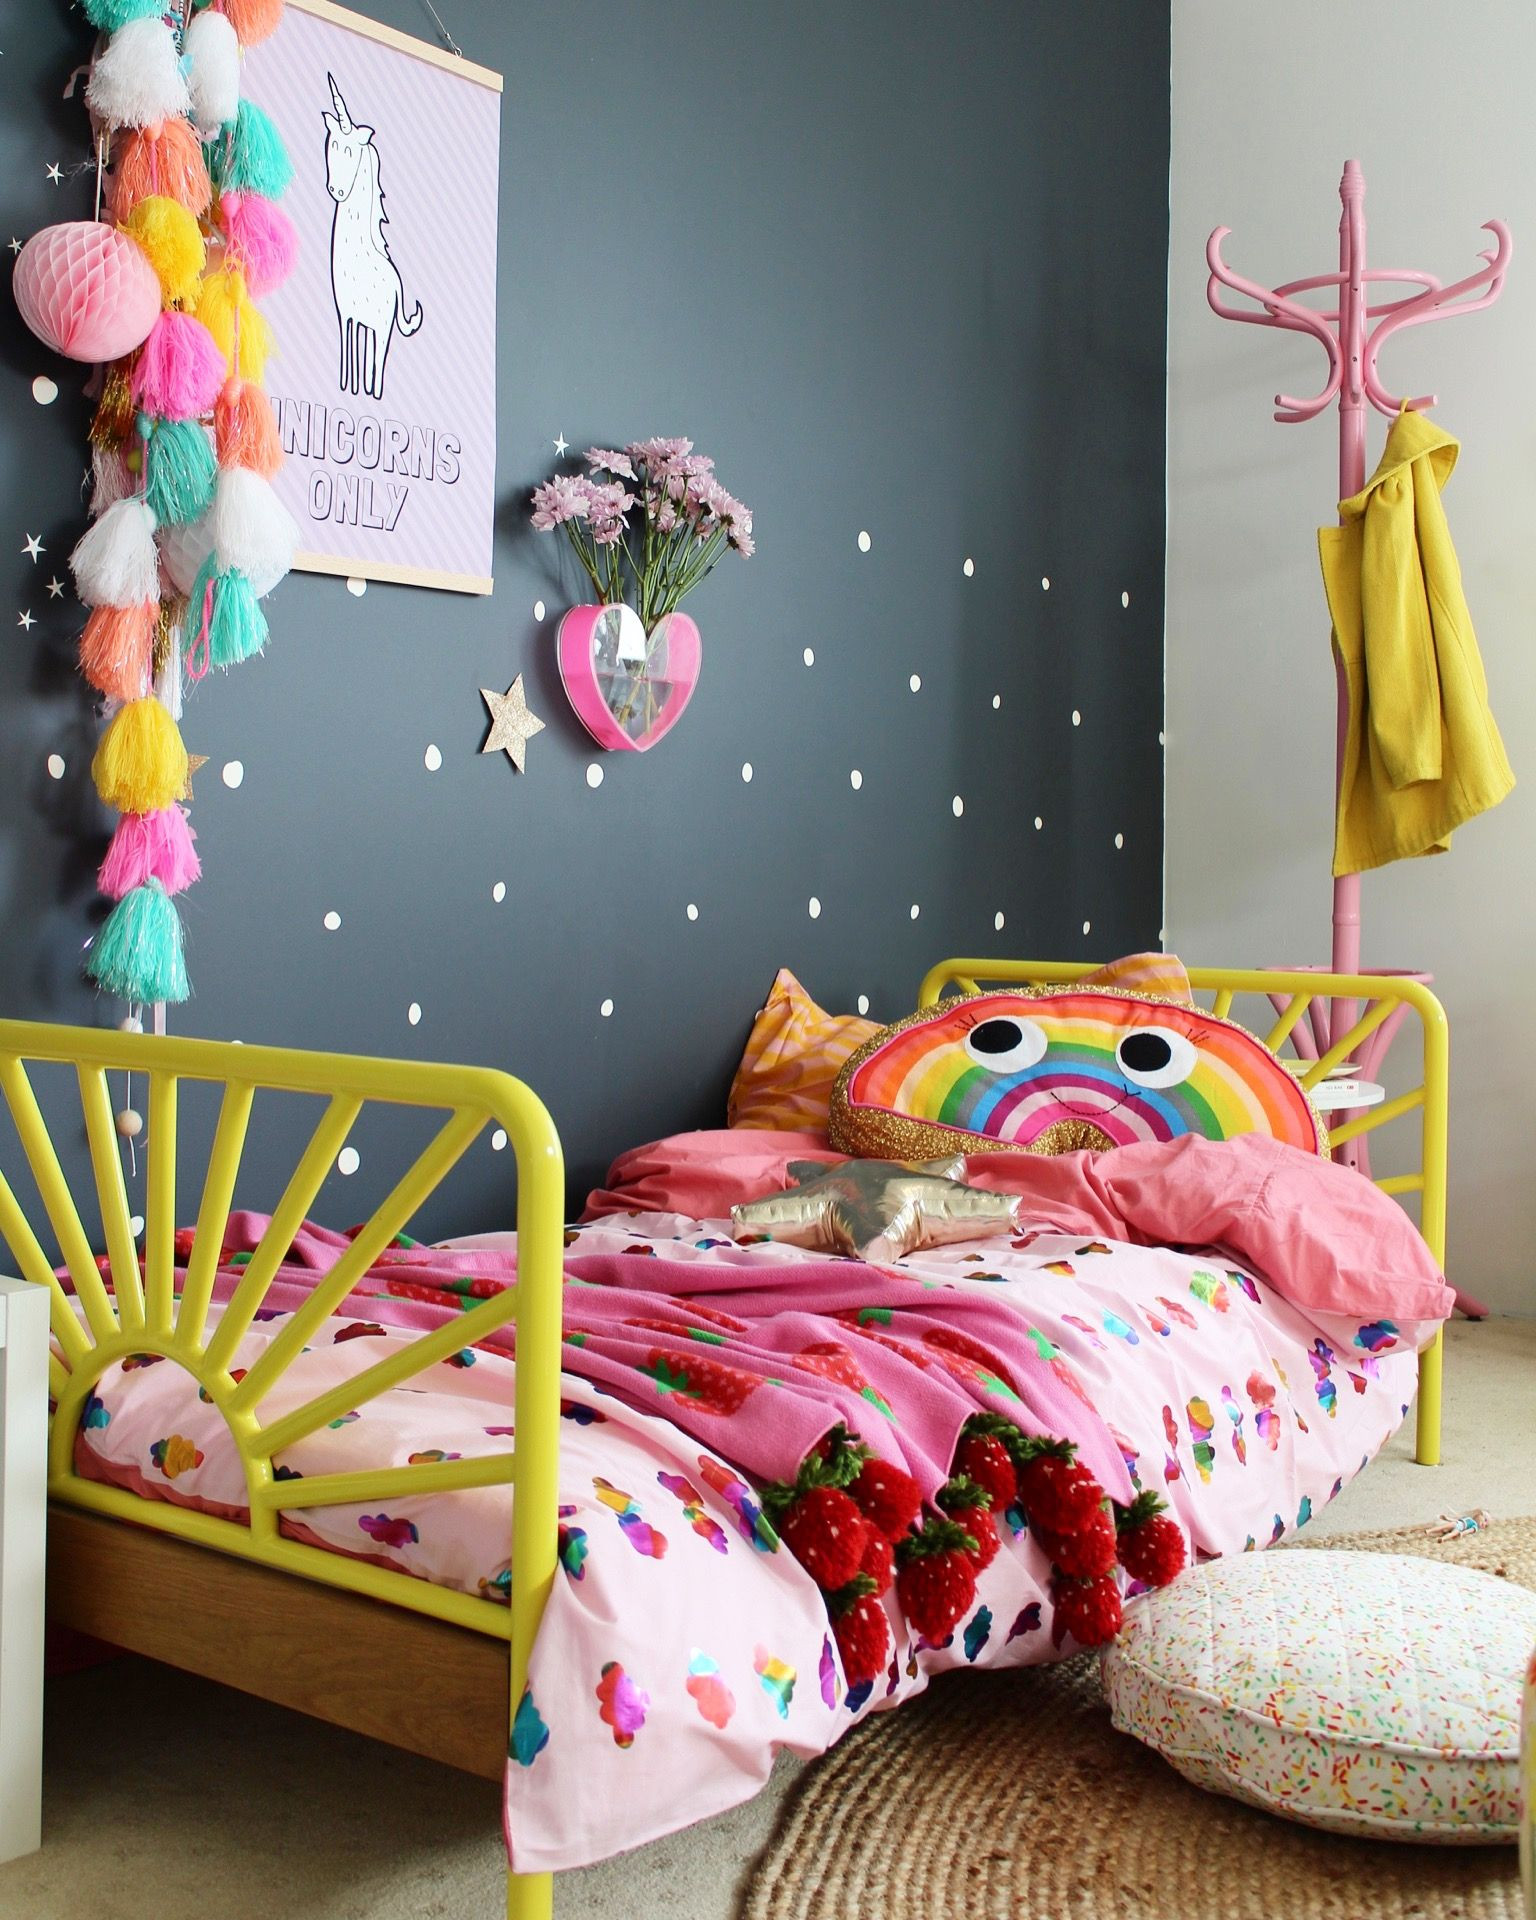 DIY Kids Room Decorations
 25 Amazing Girls Room Decor Ideas for Teenagers